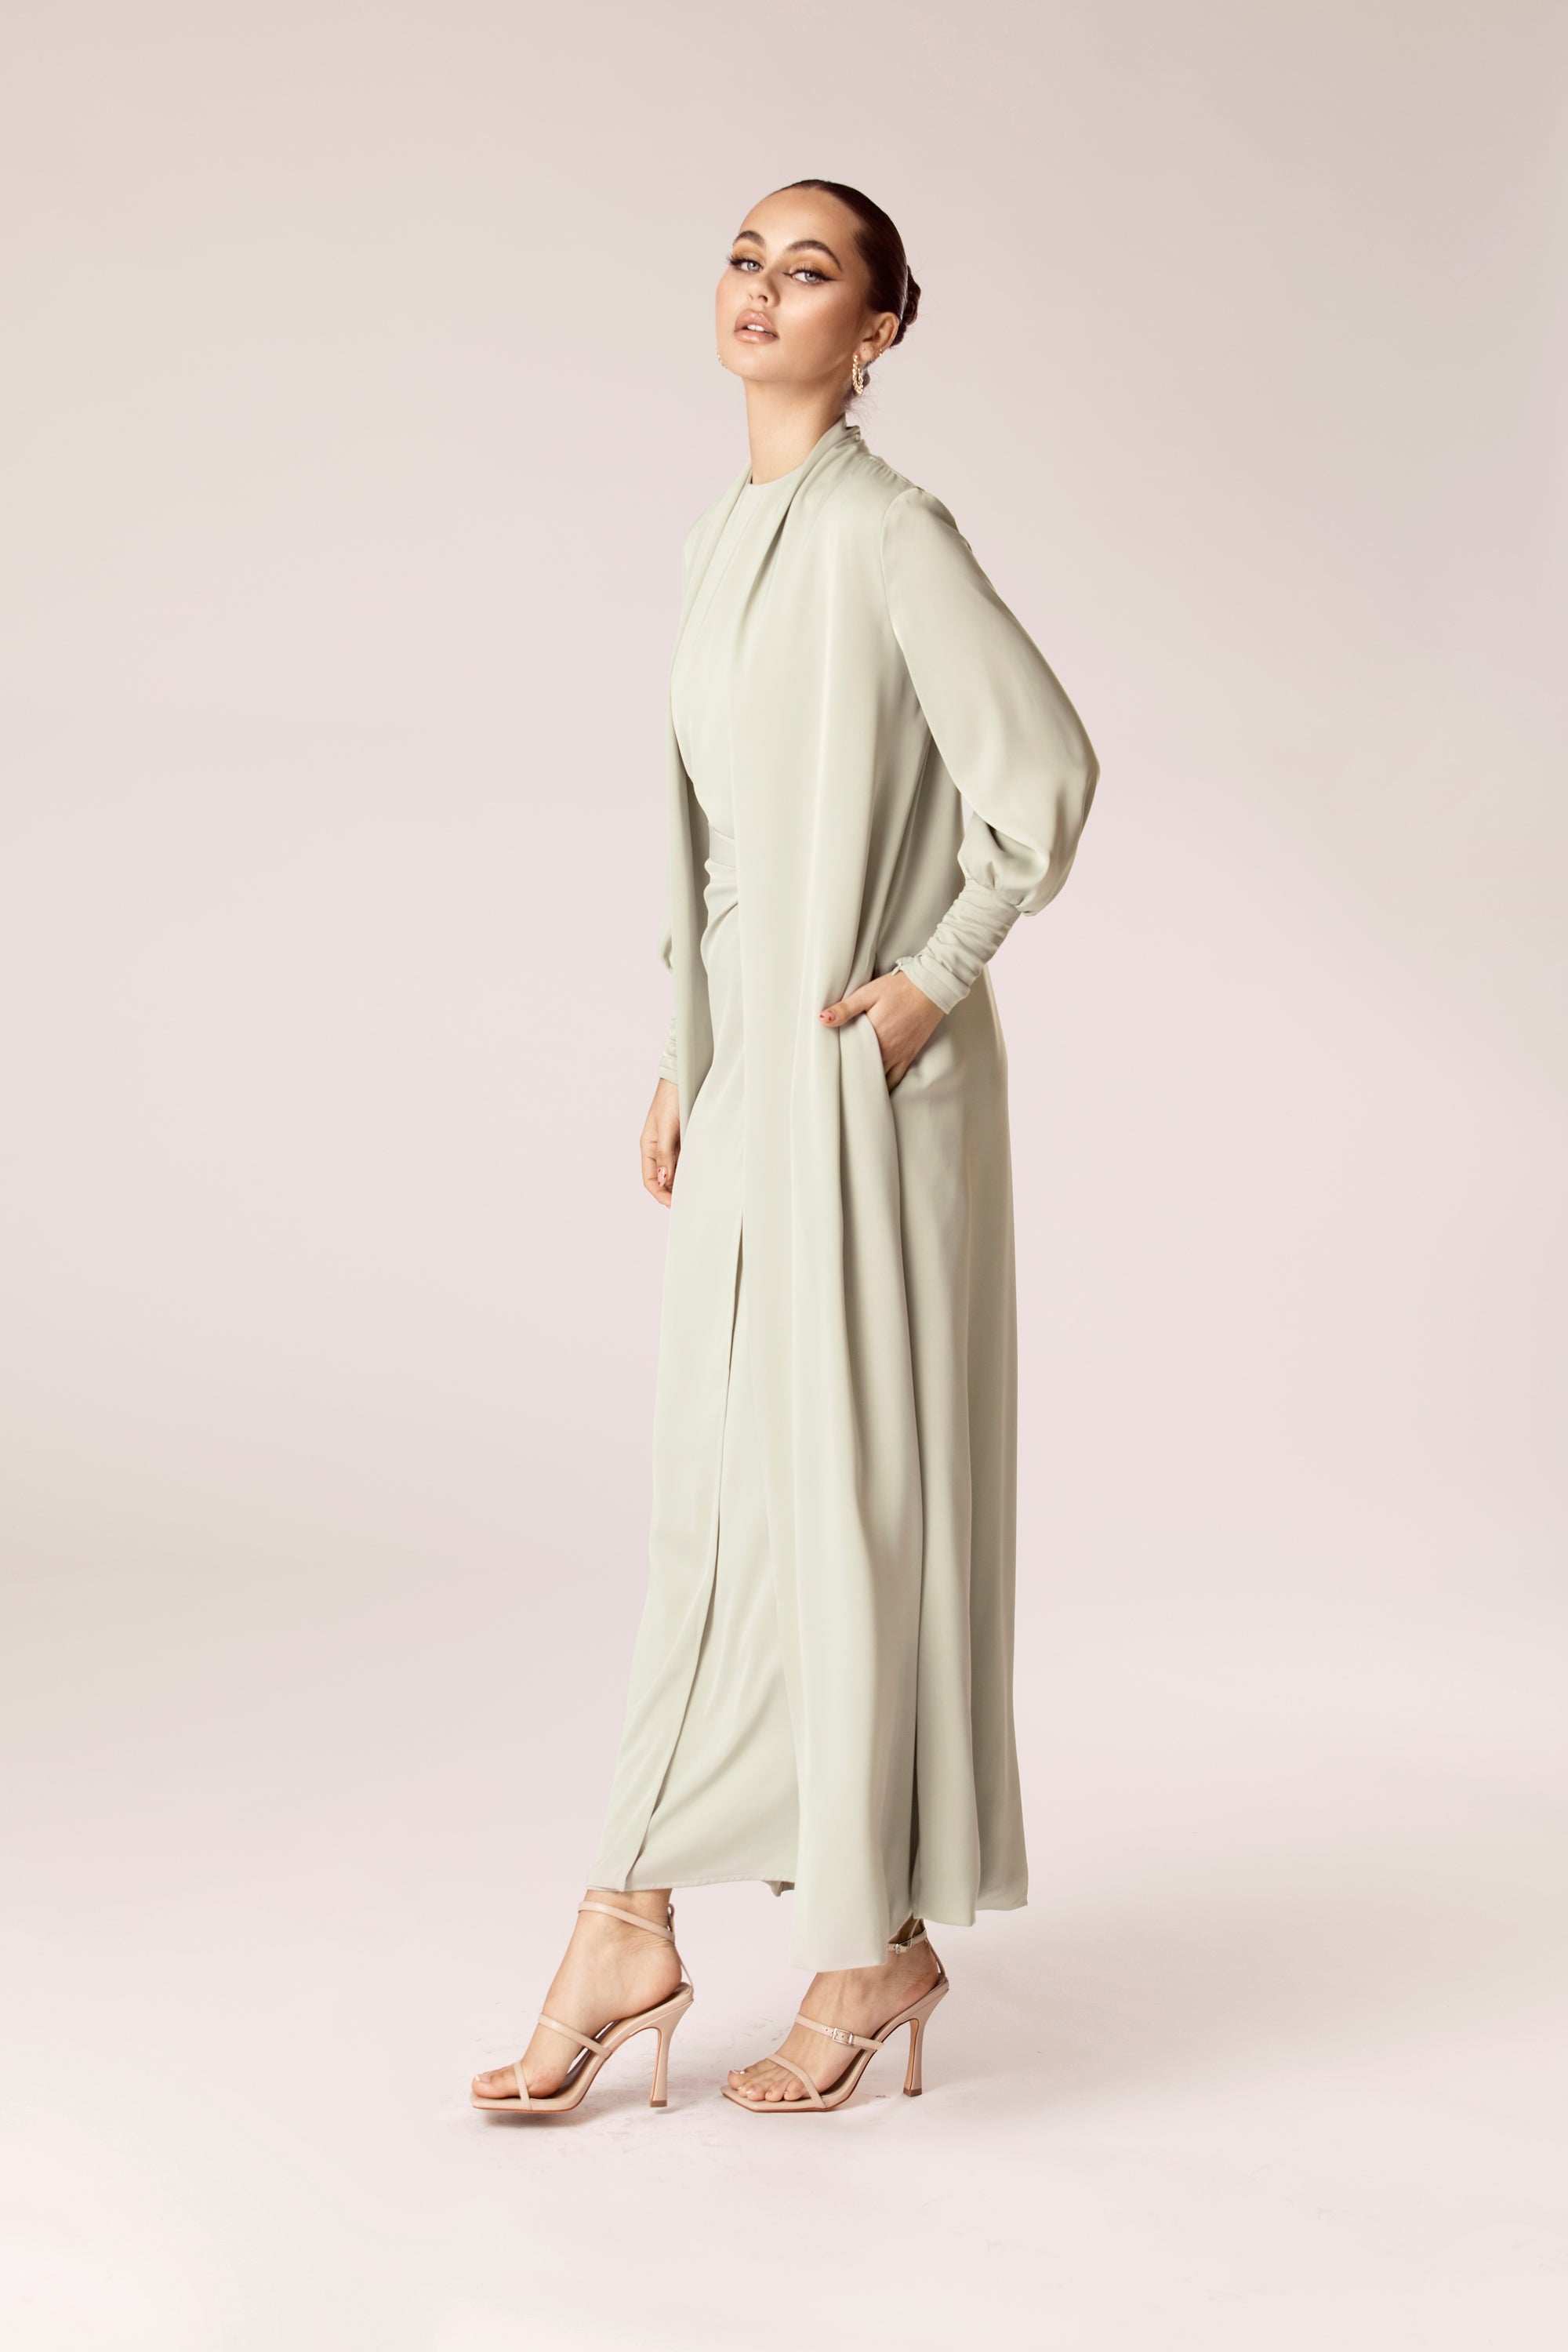 Sadia Open Abaya - Sage Veiled Collection 